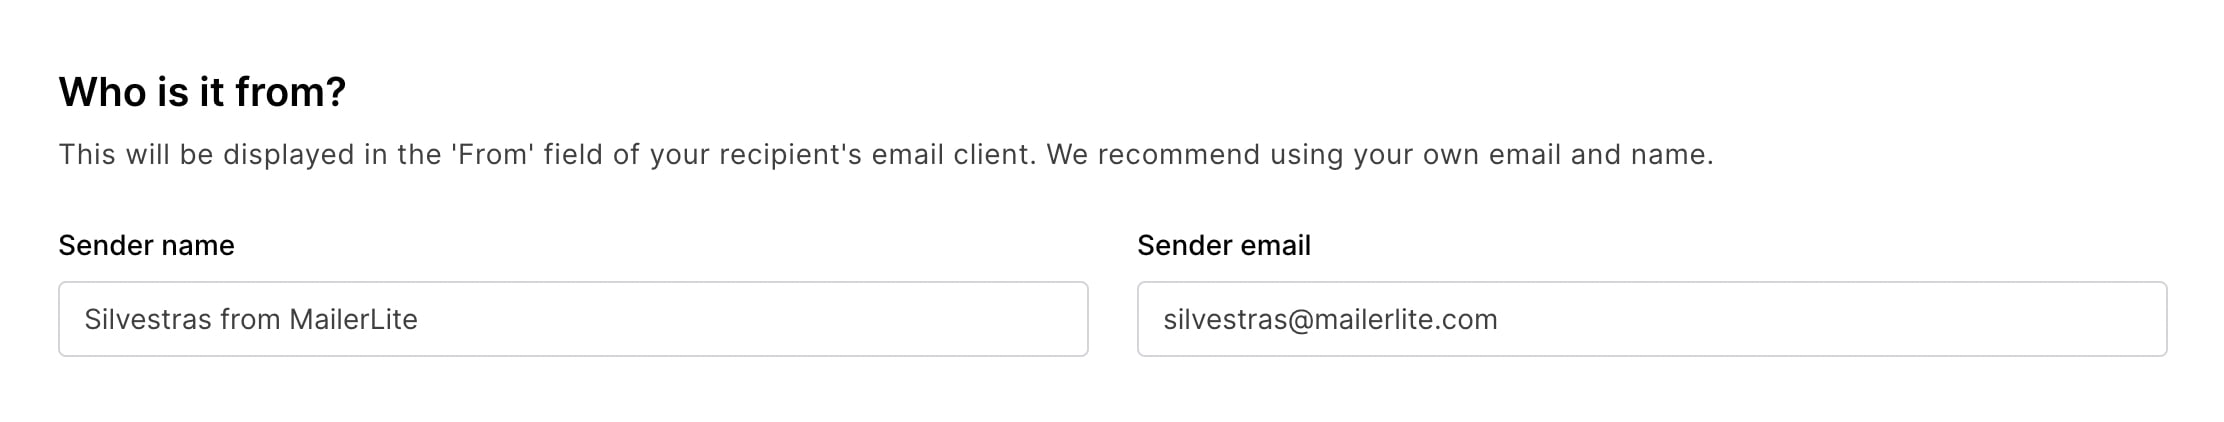 Example of custom domain email sender information